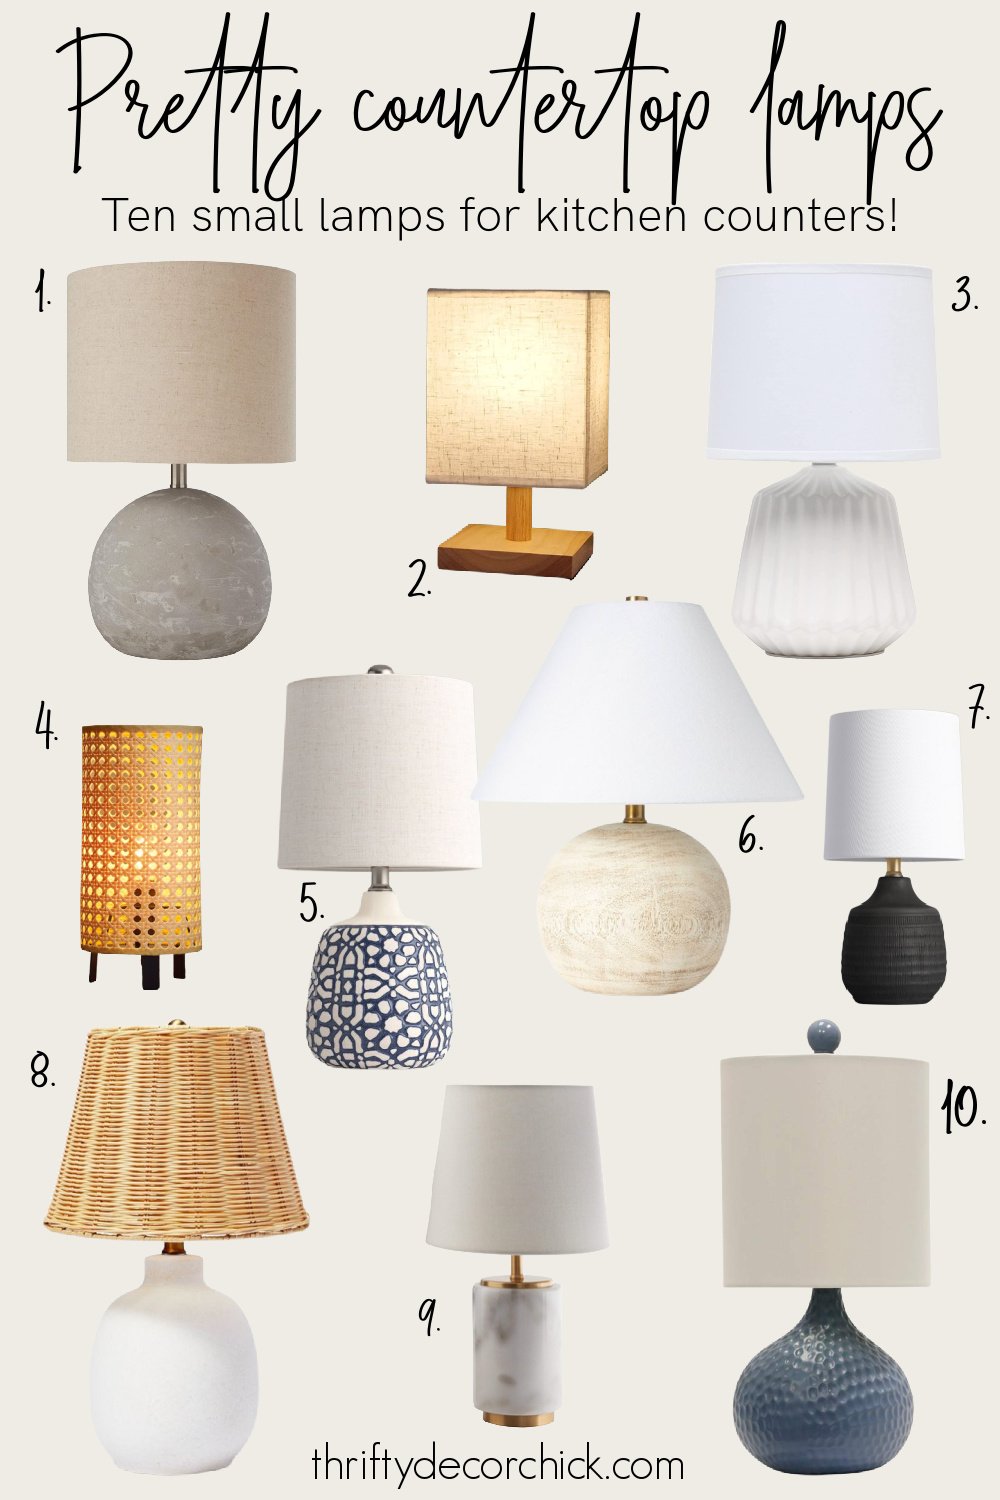 Ten countertop lamp options